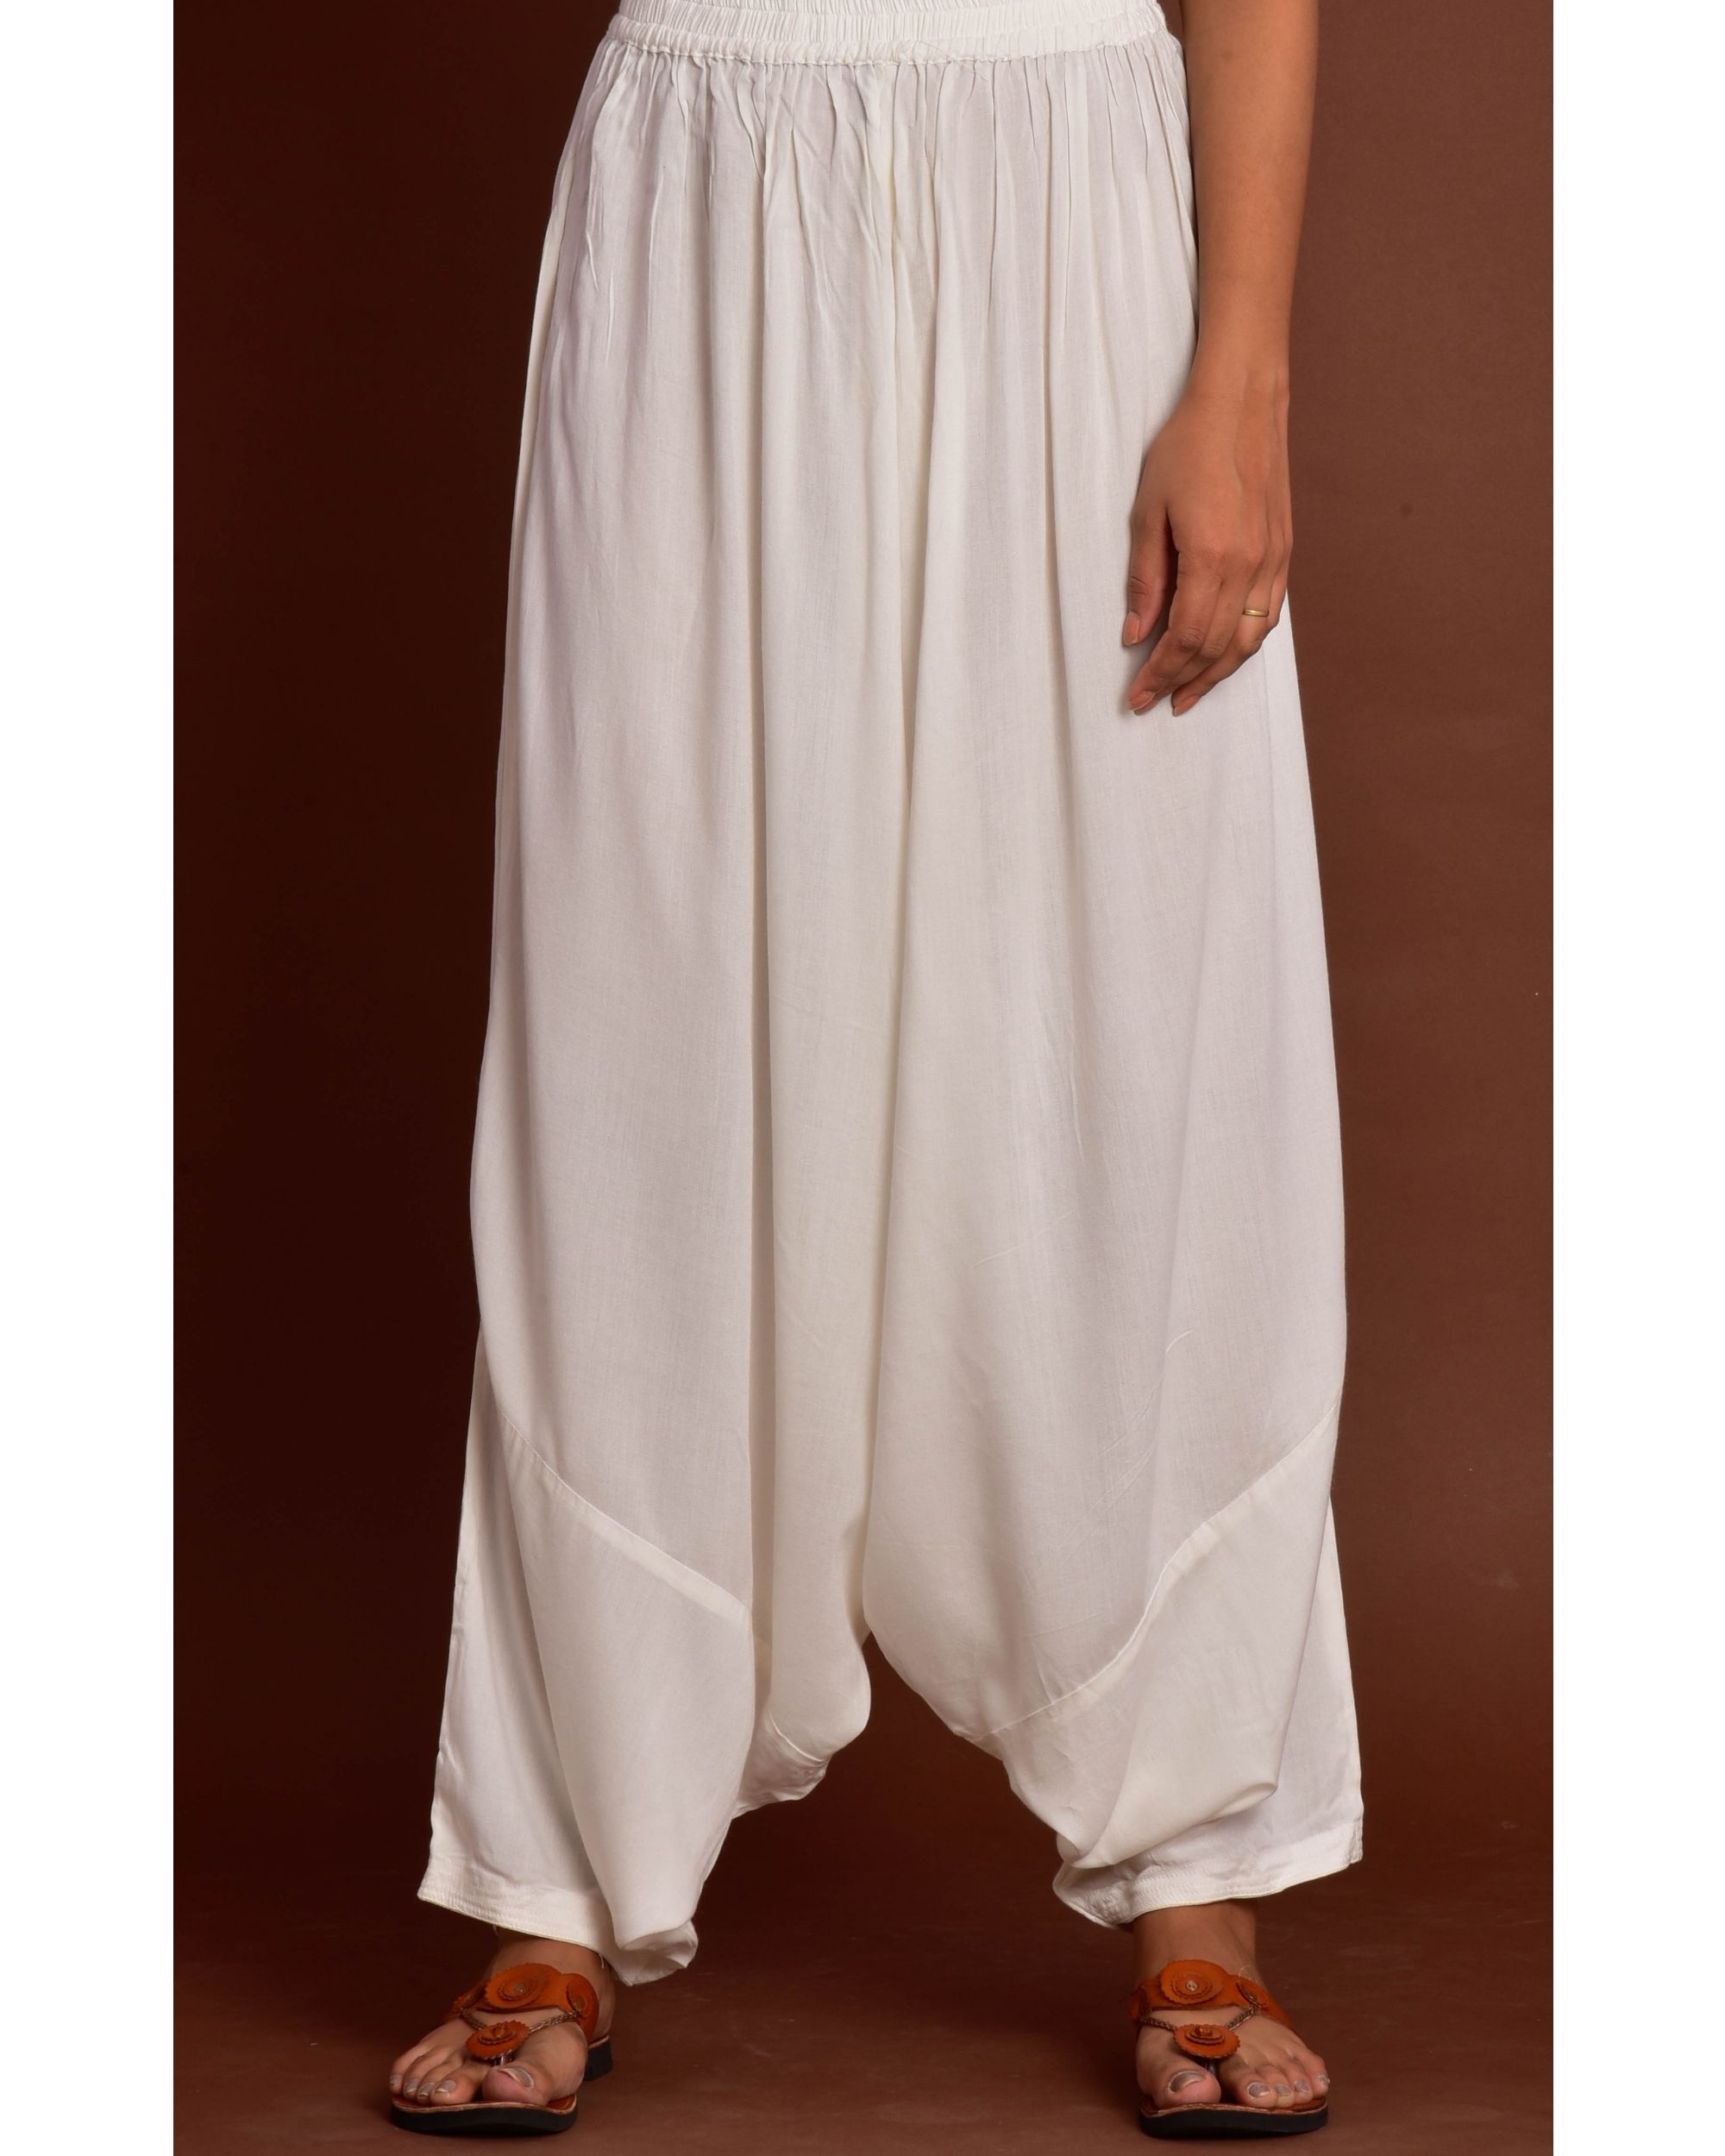 Stitched Casual Wear Ladies White Net Patiala Salwar Waist Size 2636 Inch